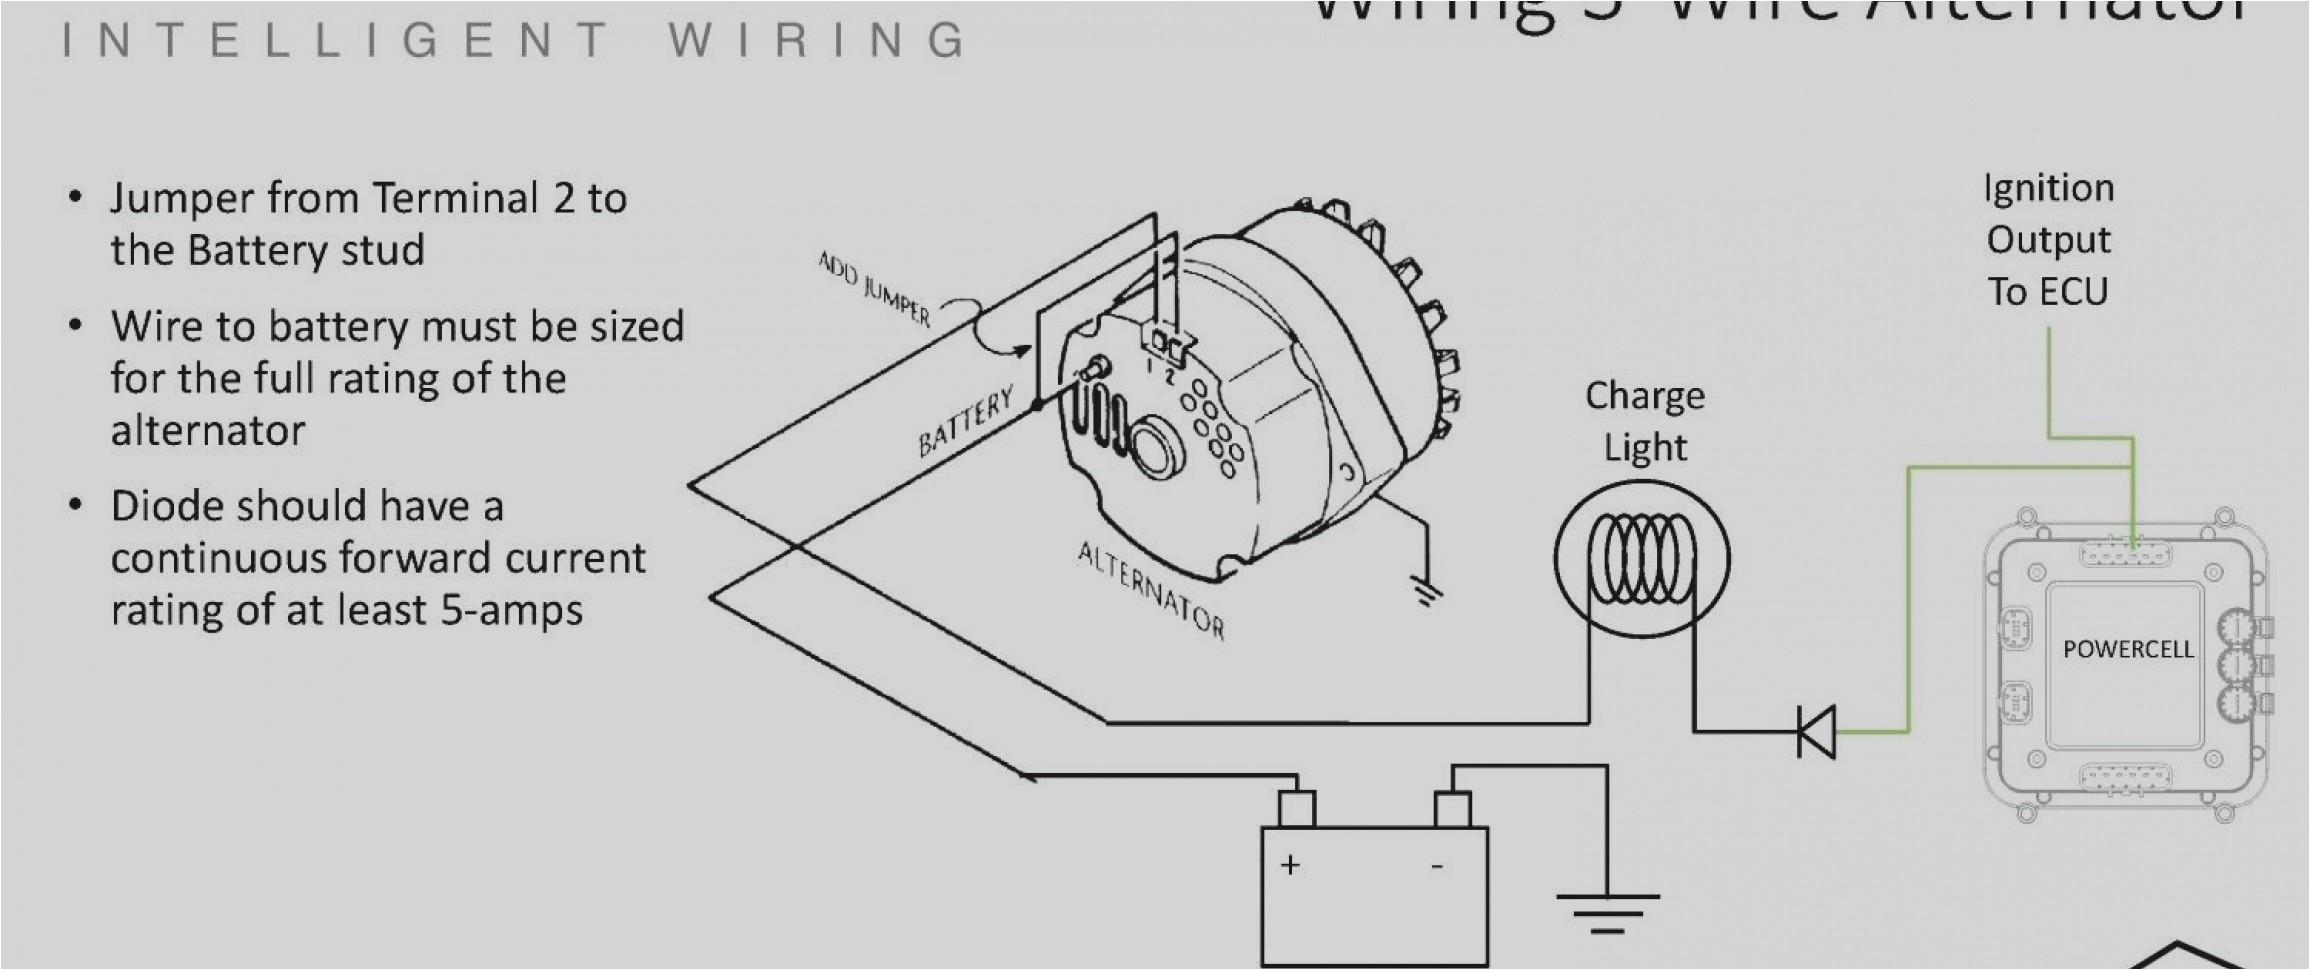 delco remy alternator diagram wiring diagram datasourcedelco remy 10si alternator wiring diagram wiring diagrams wni delco